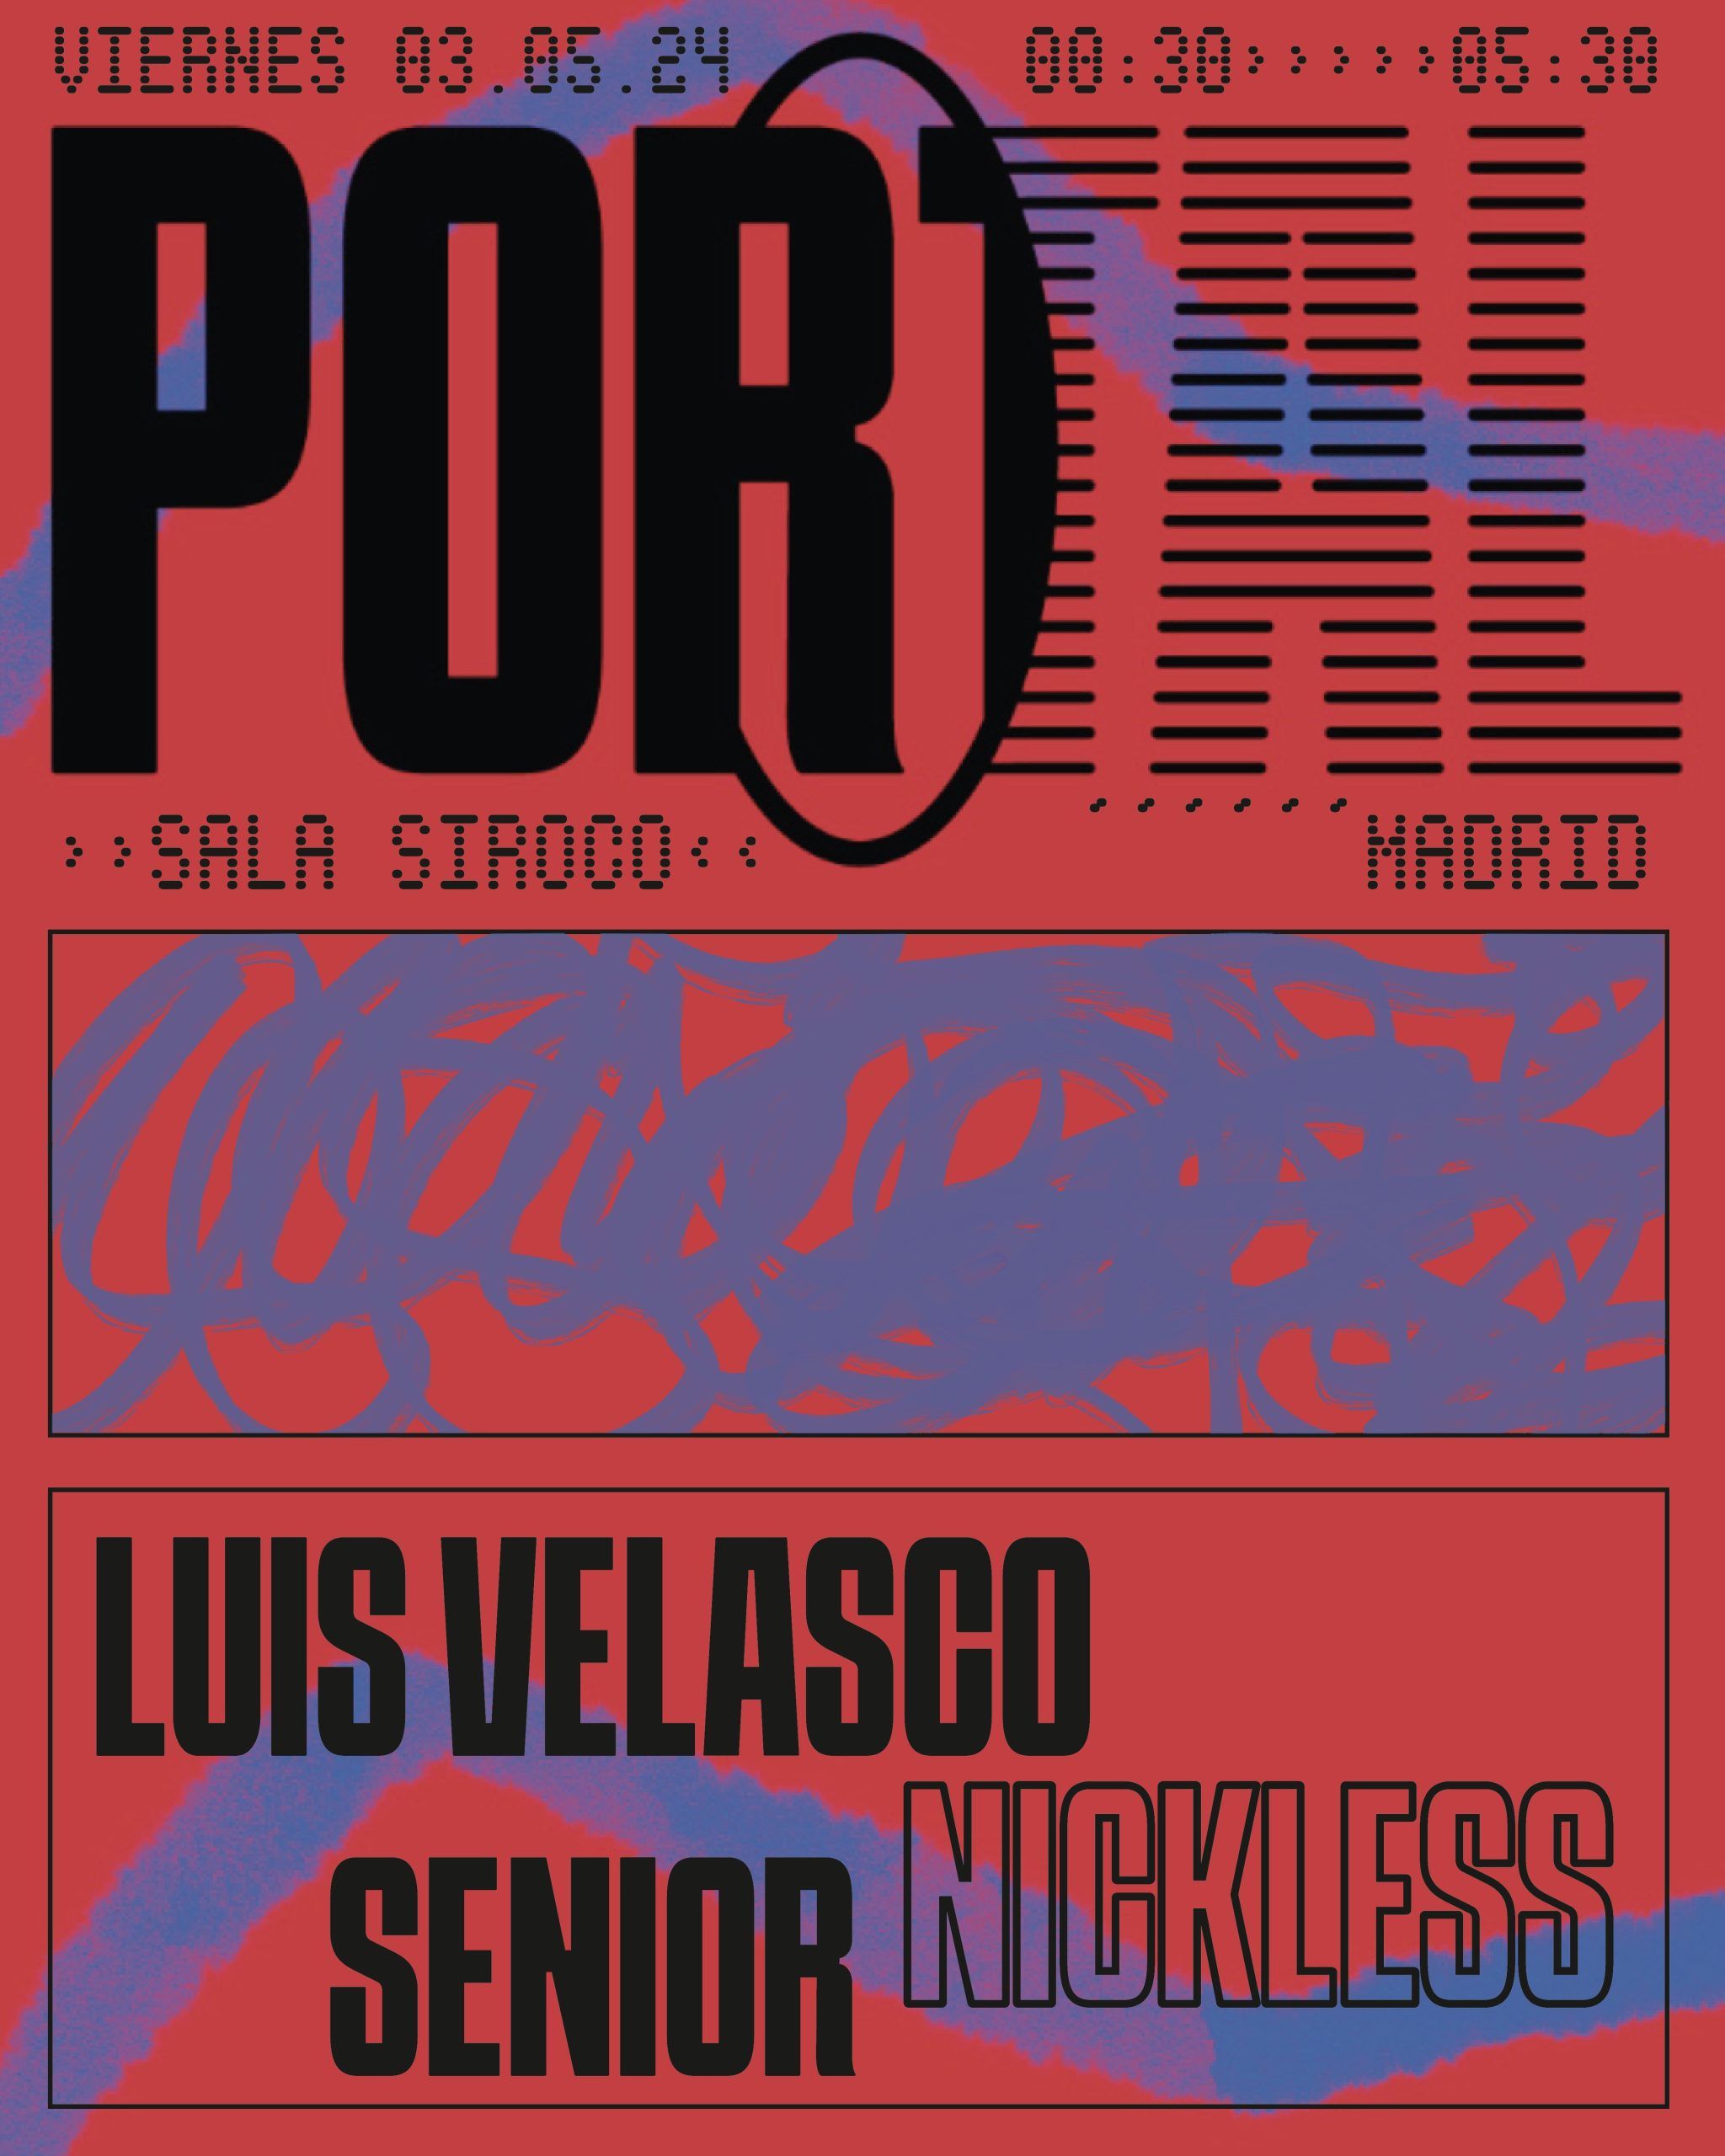 Portal: Luis Velasco  + Nickless + Senior